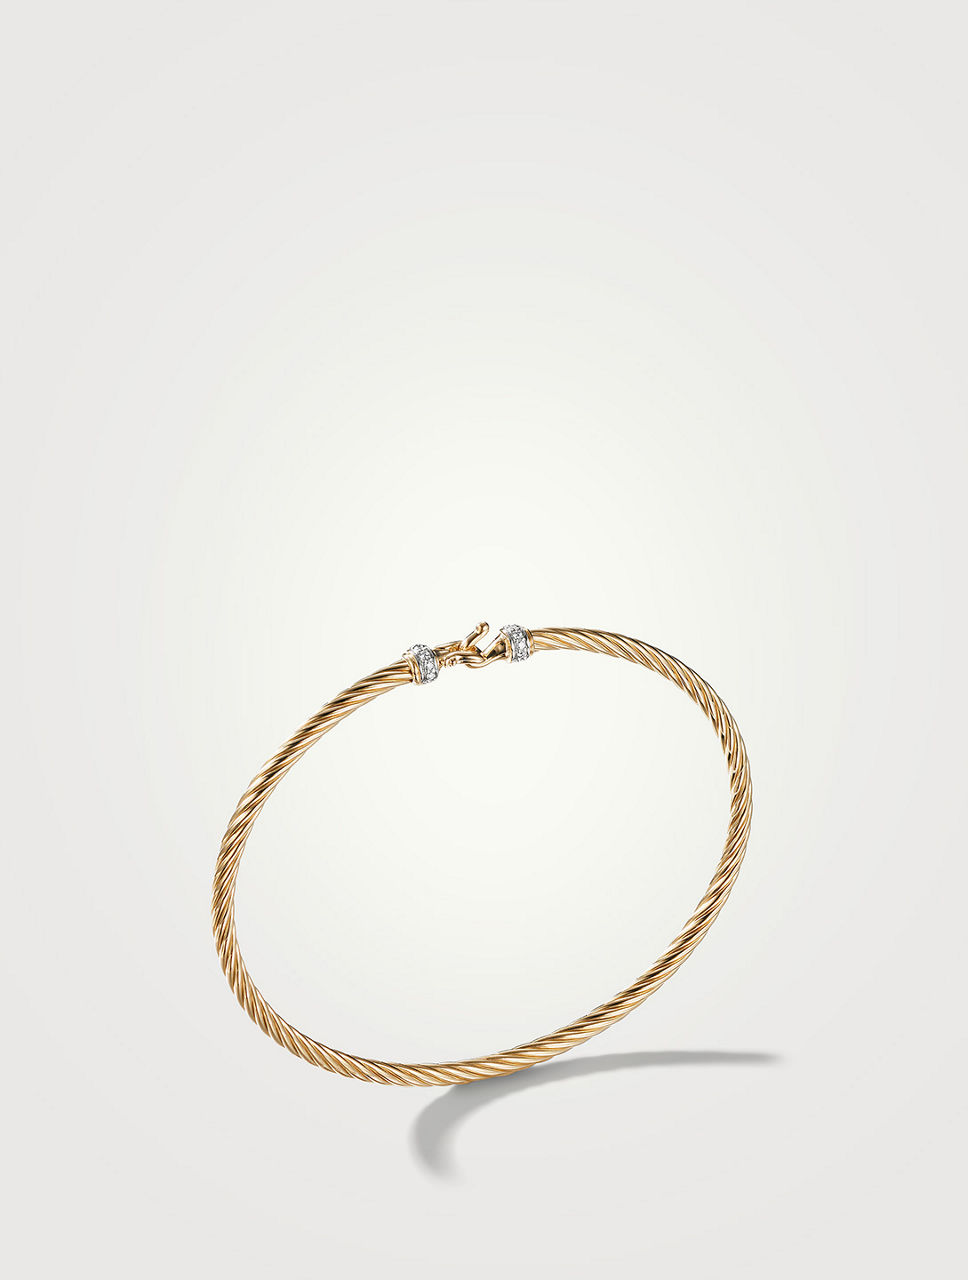 DAVID YURMAN Buckle Bracelet In 18k Yellow Gold With Pavé Diamonds